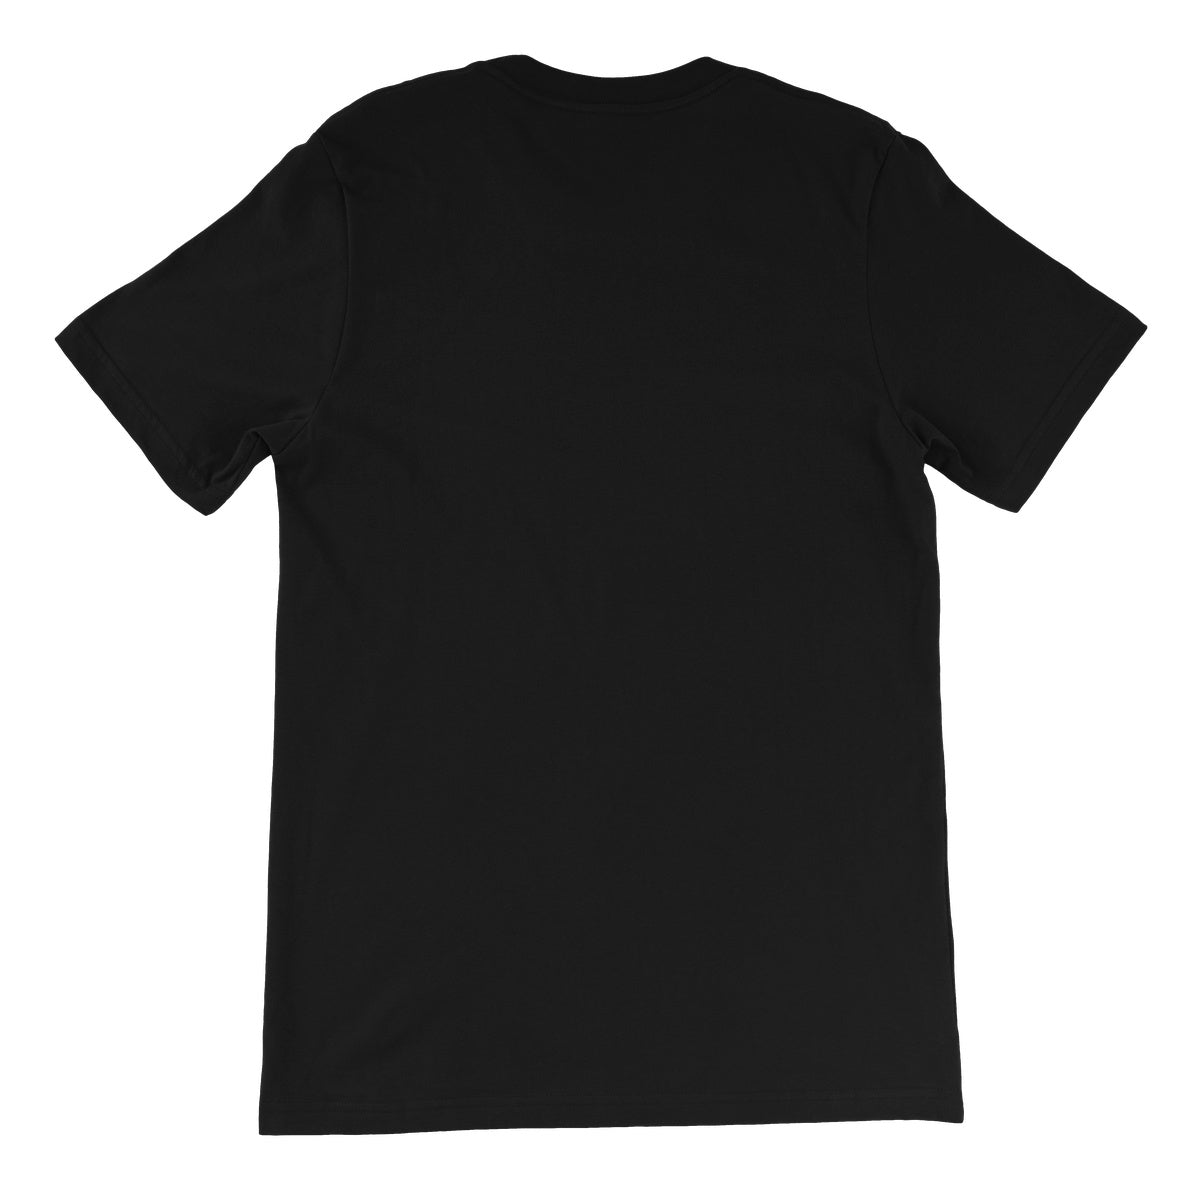 Bound For Glory 2020 - Bey Unisex Short Sleeve T-Shirt